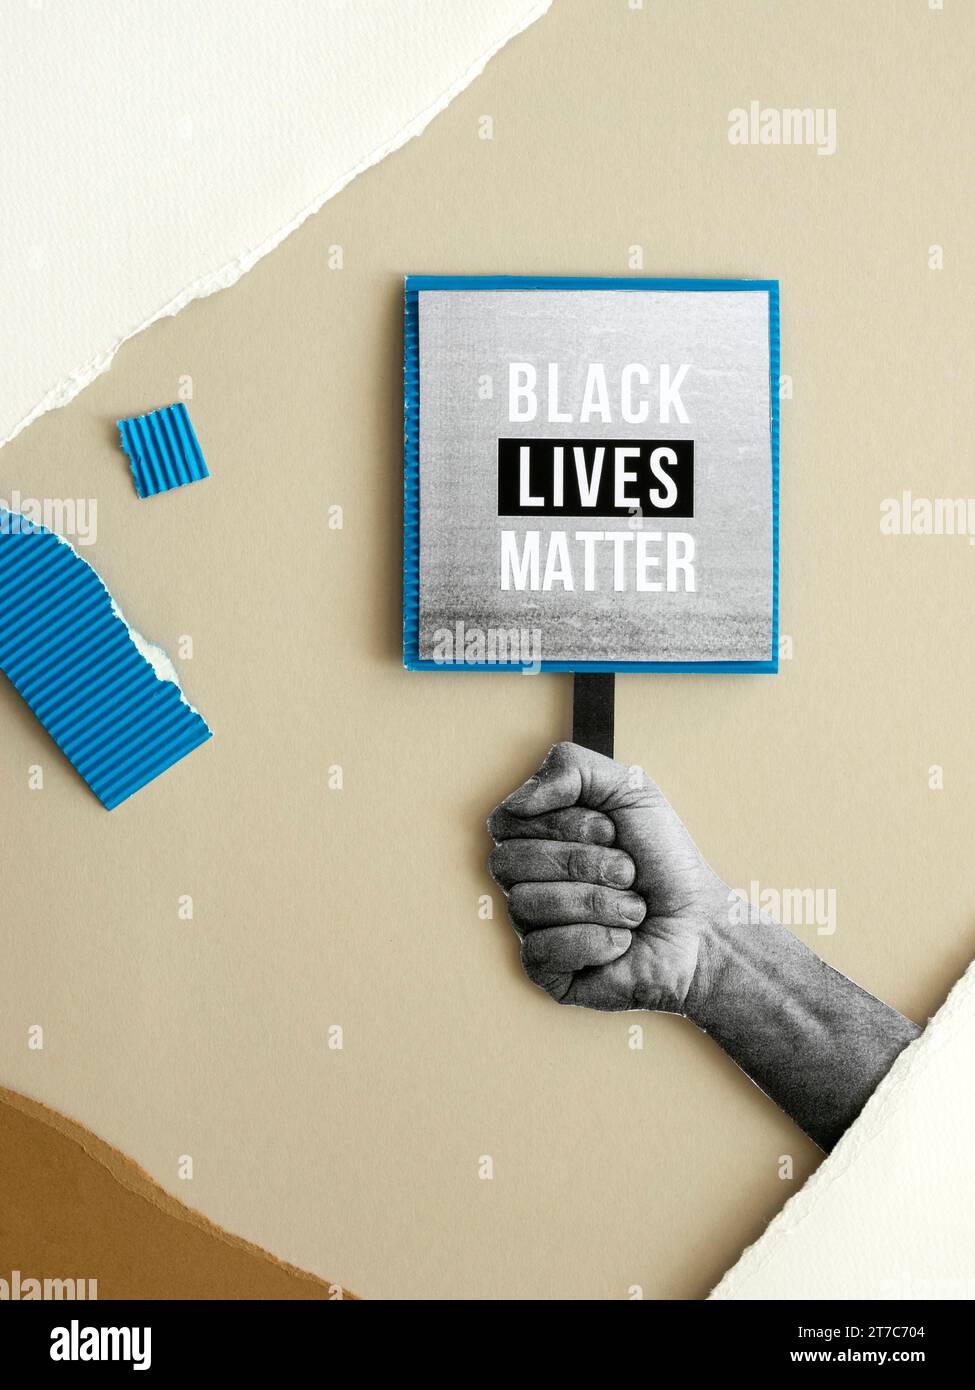 Hand holding black lives matter sign Stock Photo